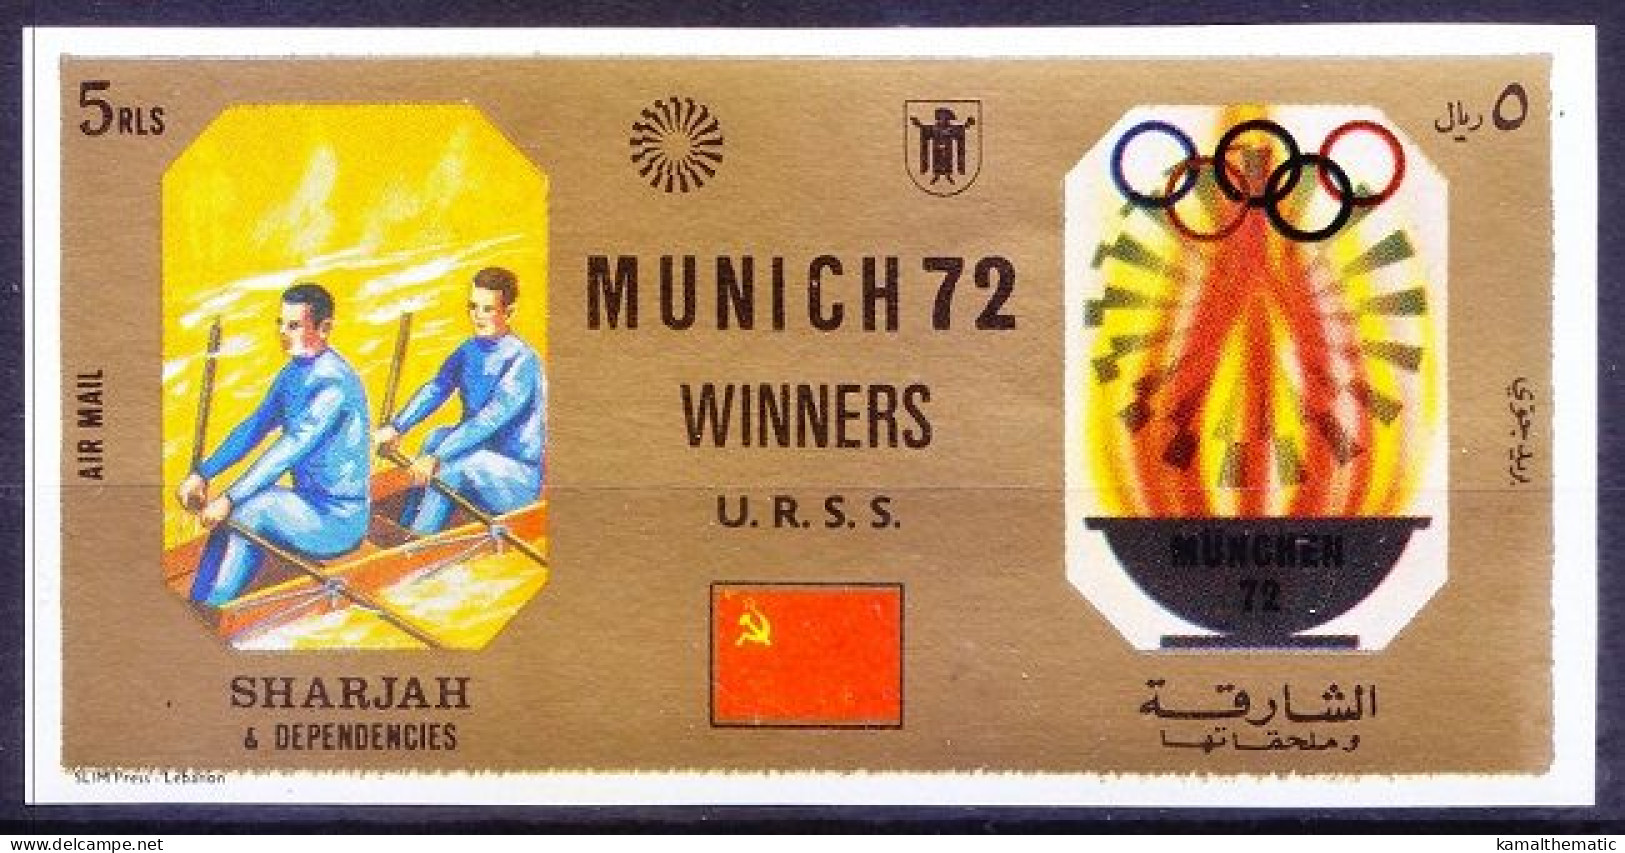 Sharjah 1972 MNH, Olympic Games, Rowing Winner Russia, Sports - Summer 1972: Munich